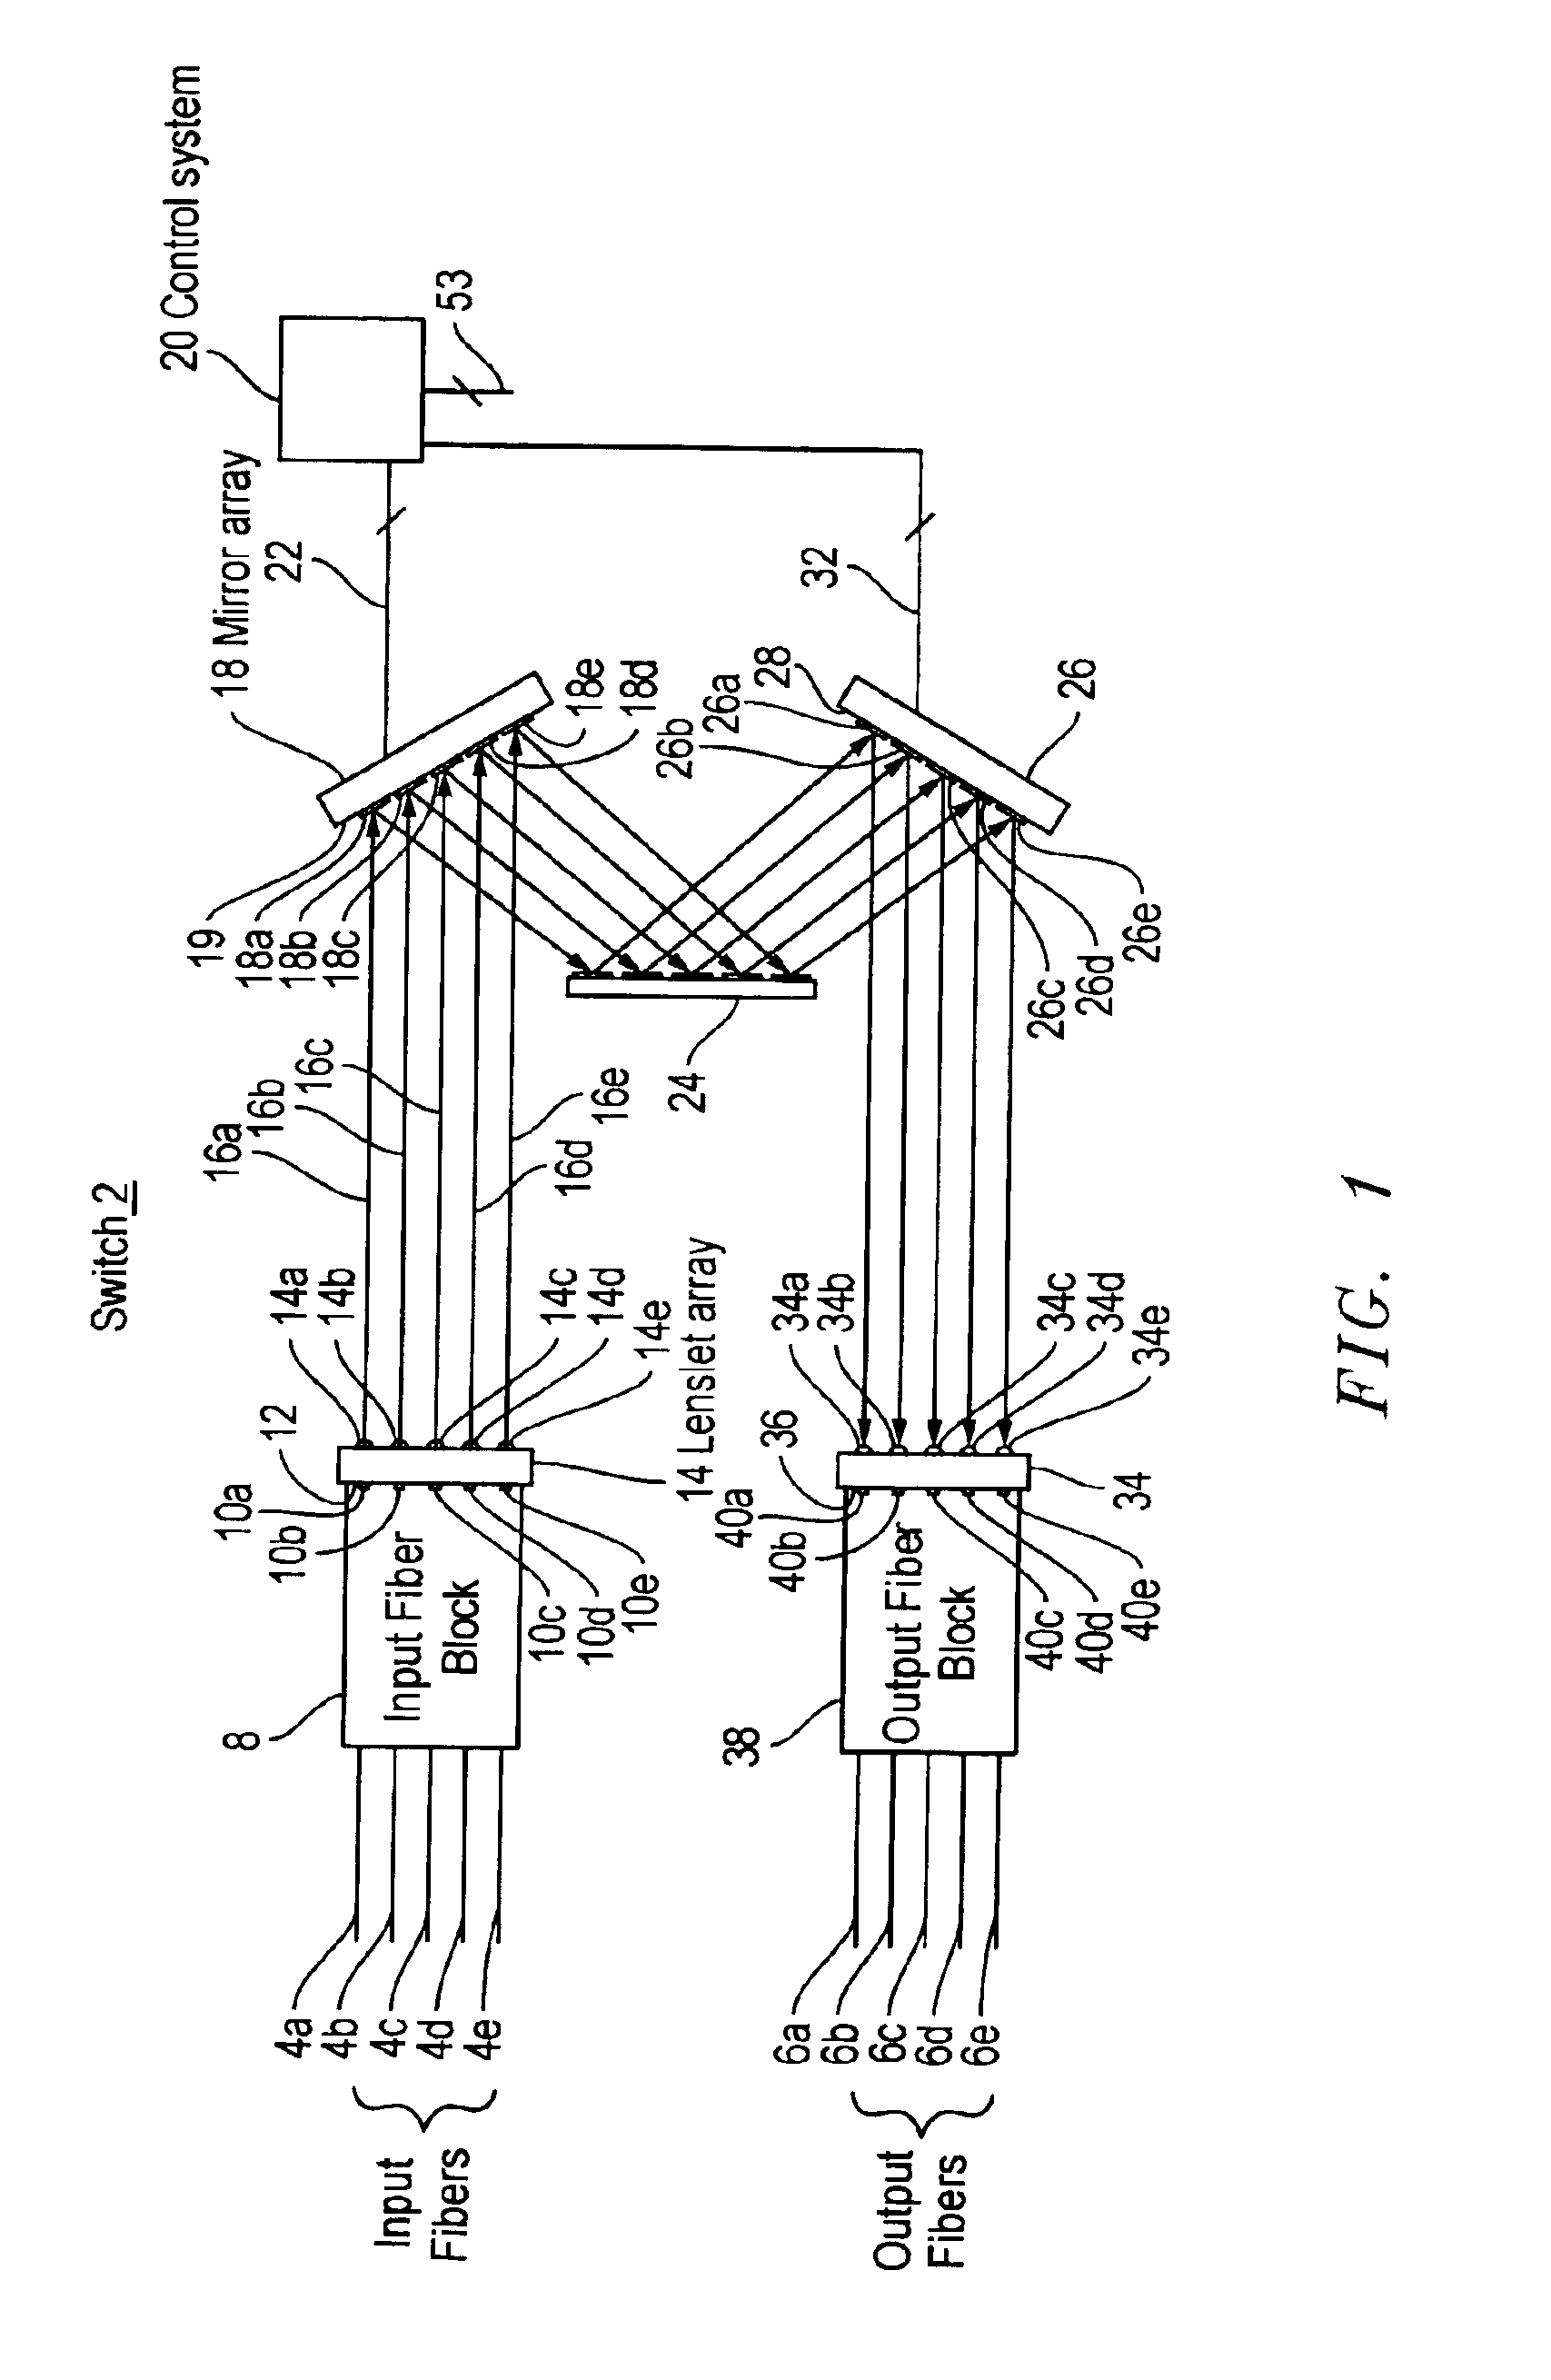 Optical configuration for optical fiber switch